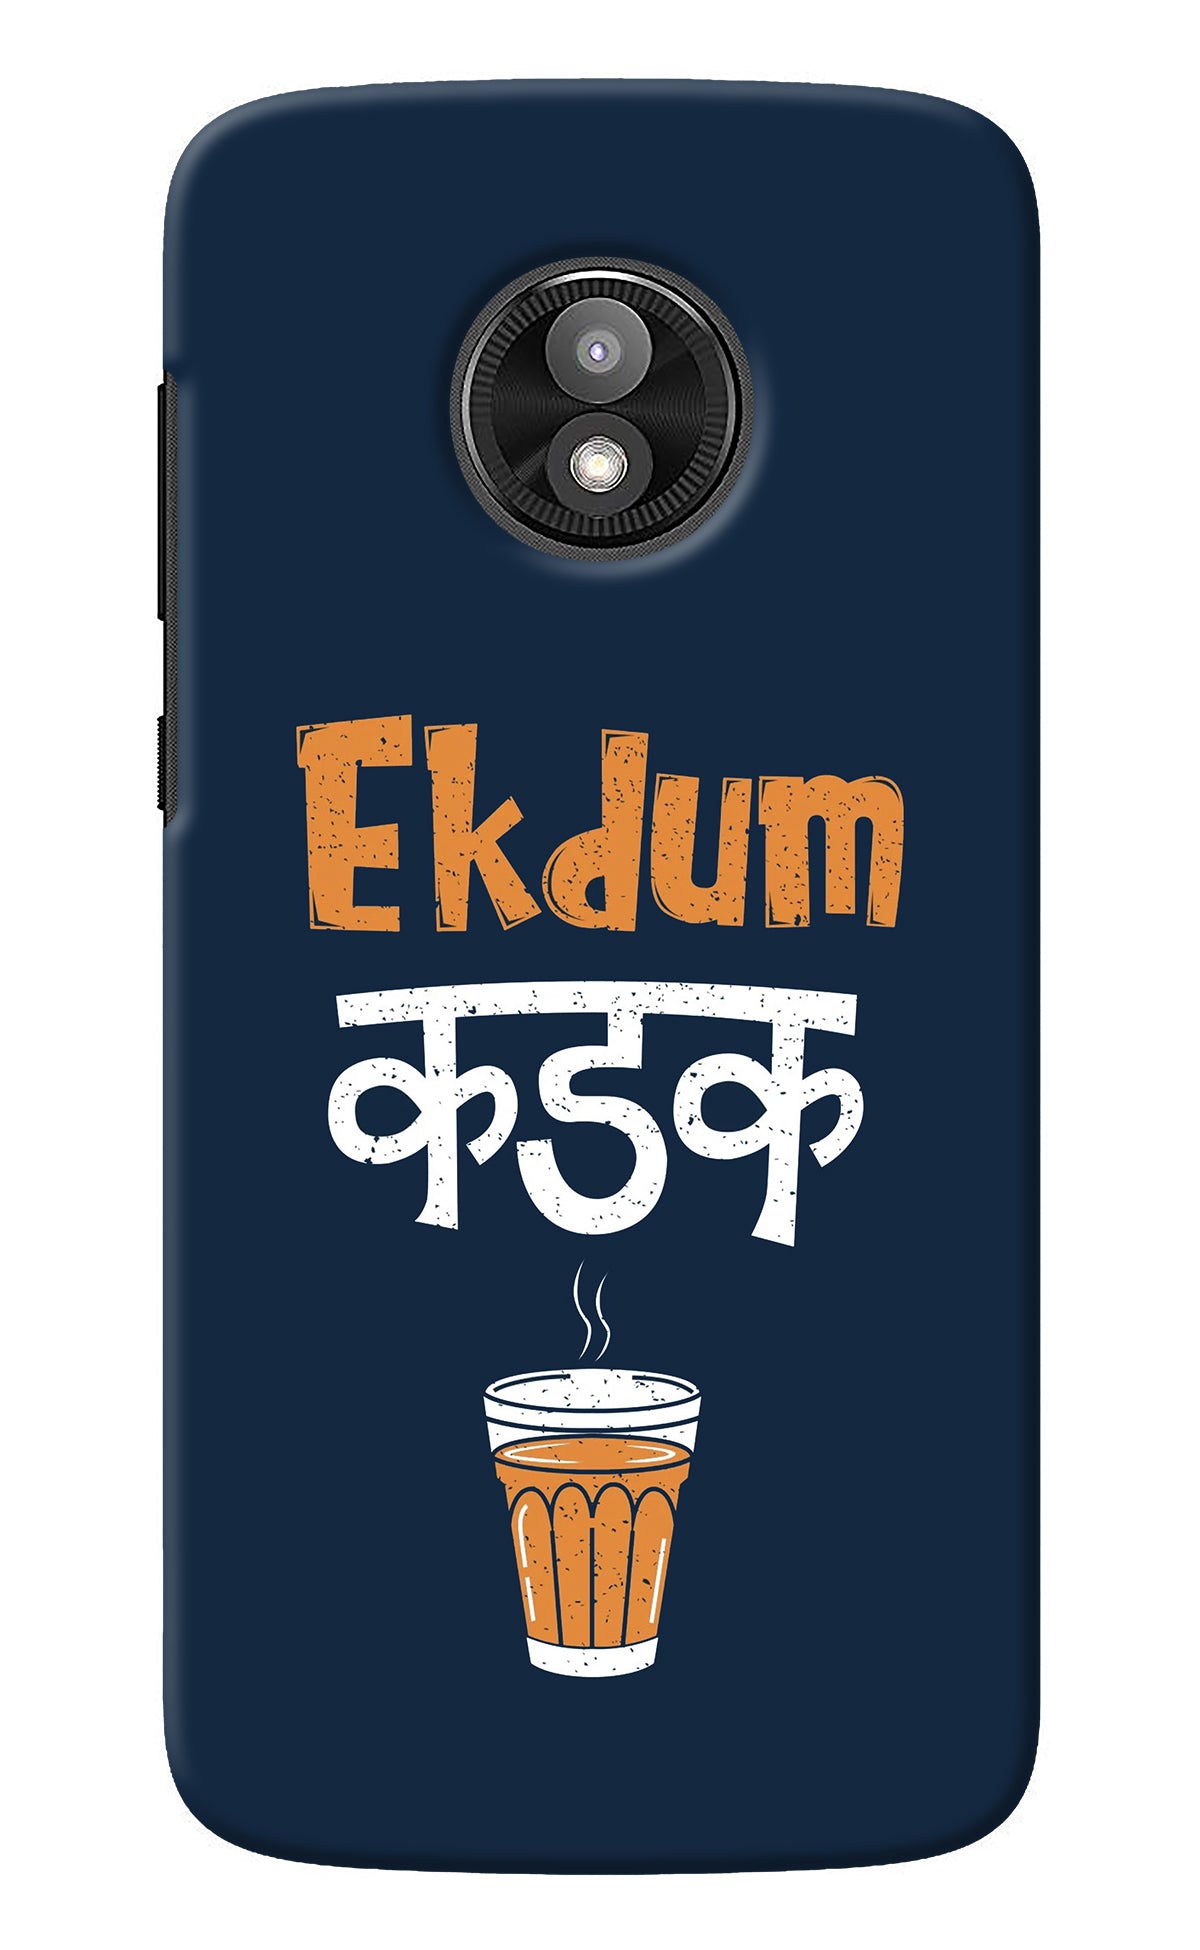 Ekdum Kadak Chai Moto E5 Play Back Cover